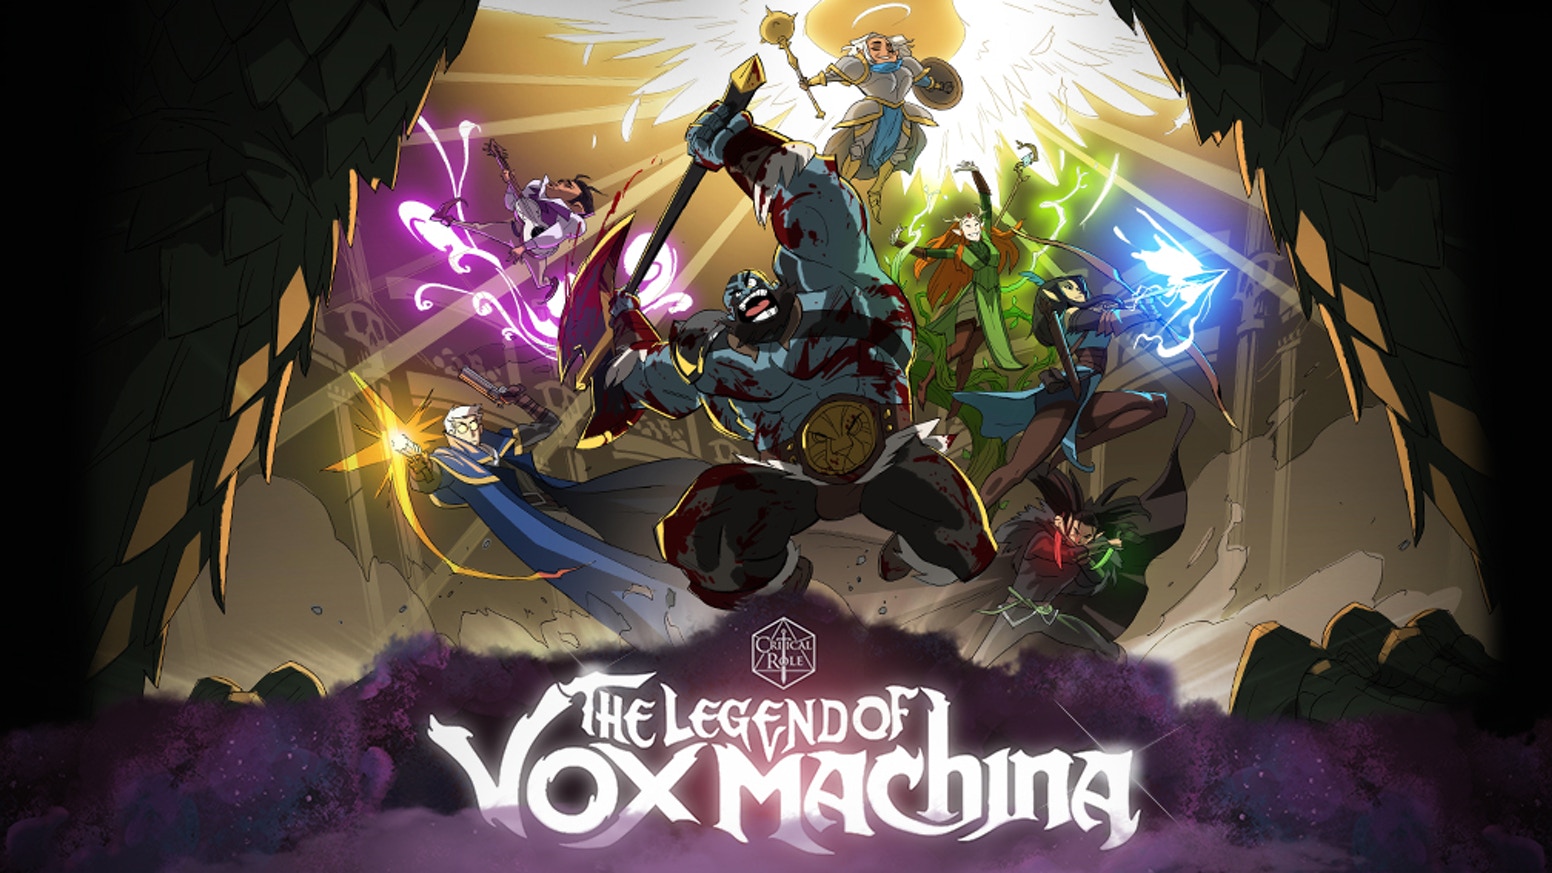 The legend of vox machina crowdfunding